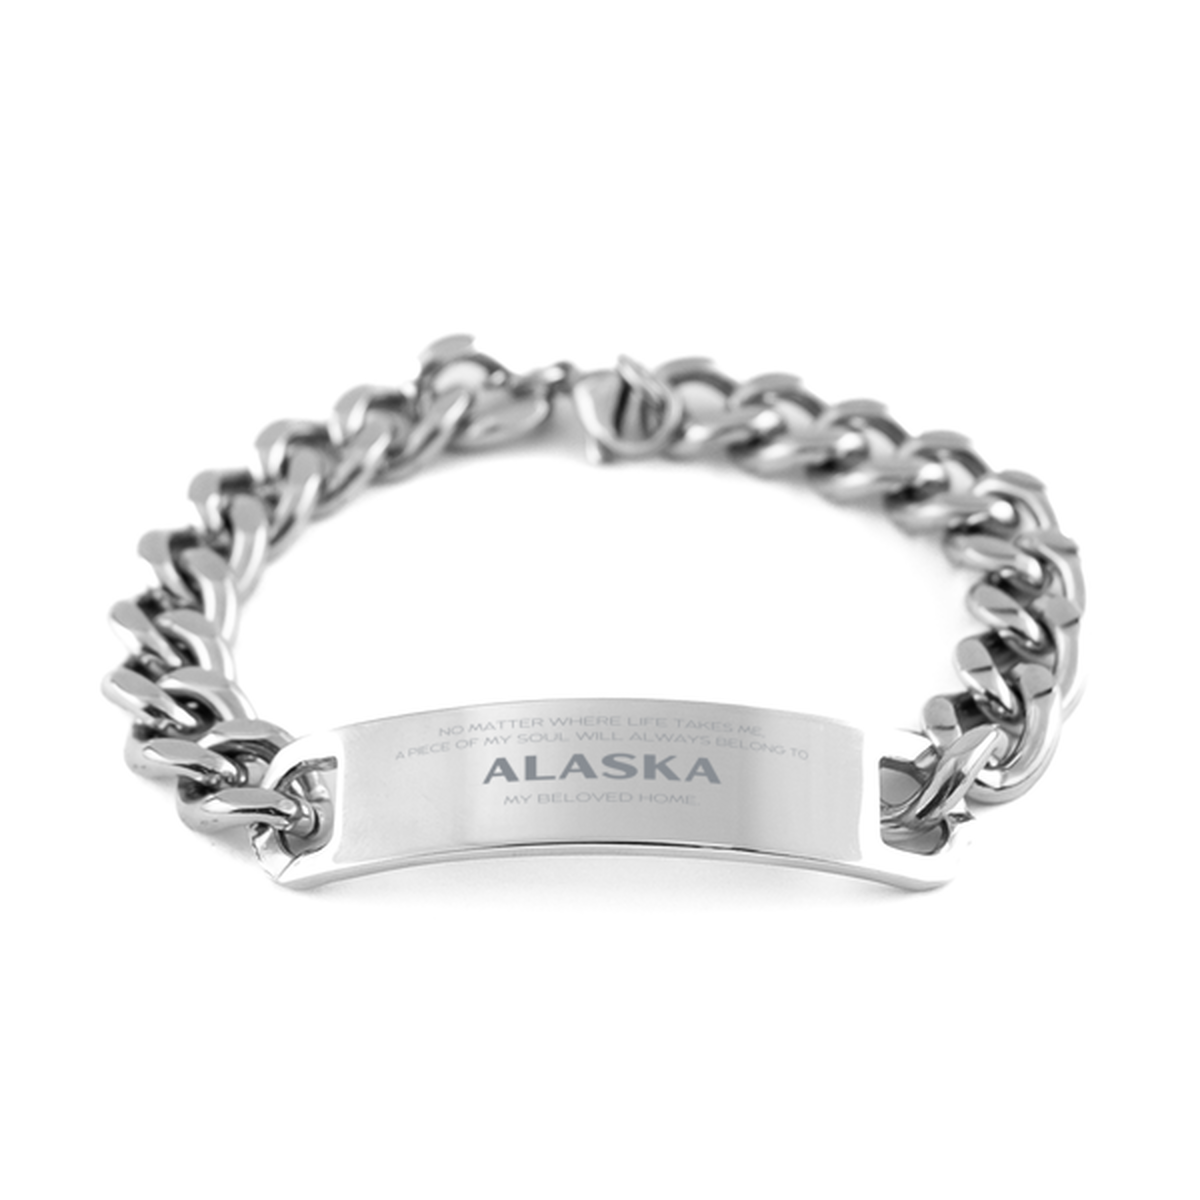 Love Alaska State Gifts, My soul will always belong to Alaska, Proud Cuban Chain Stainless Steel Bracelet, Birthday Unique Gifts For Alaska Men, Women, Friends